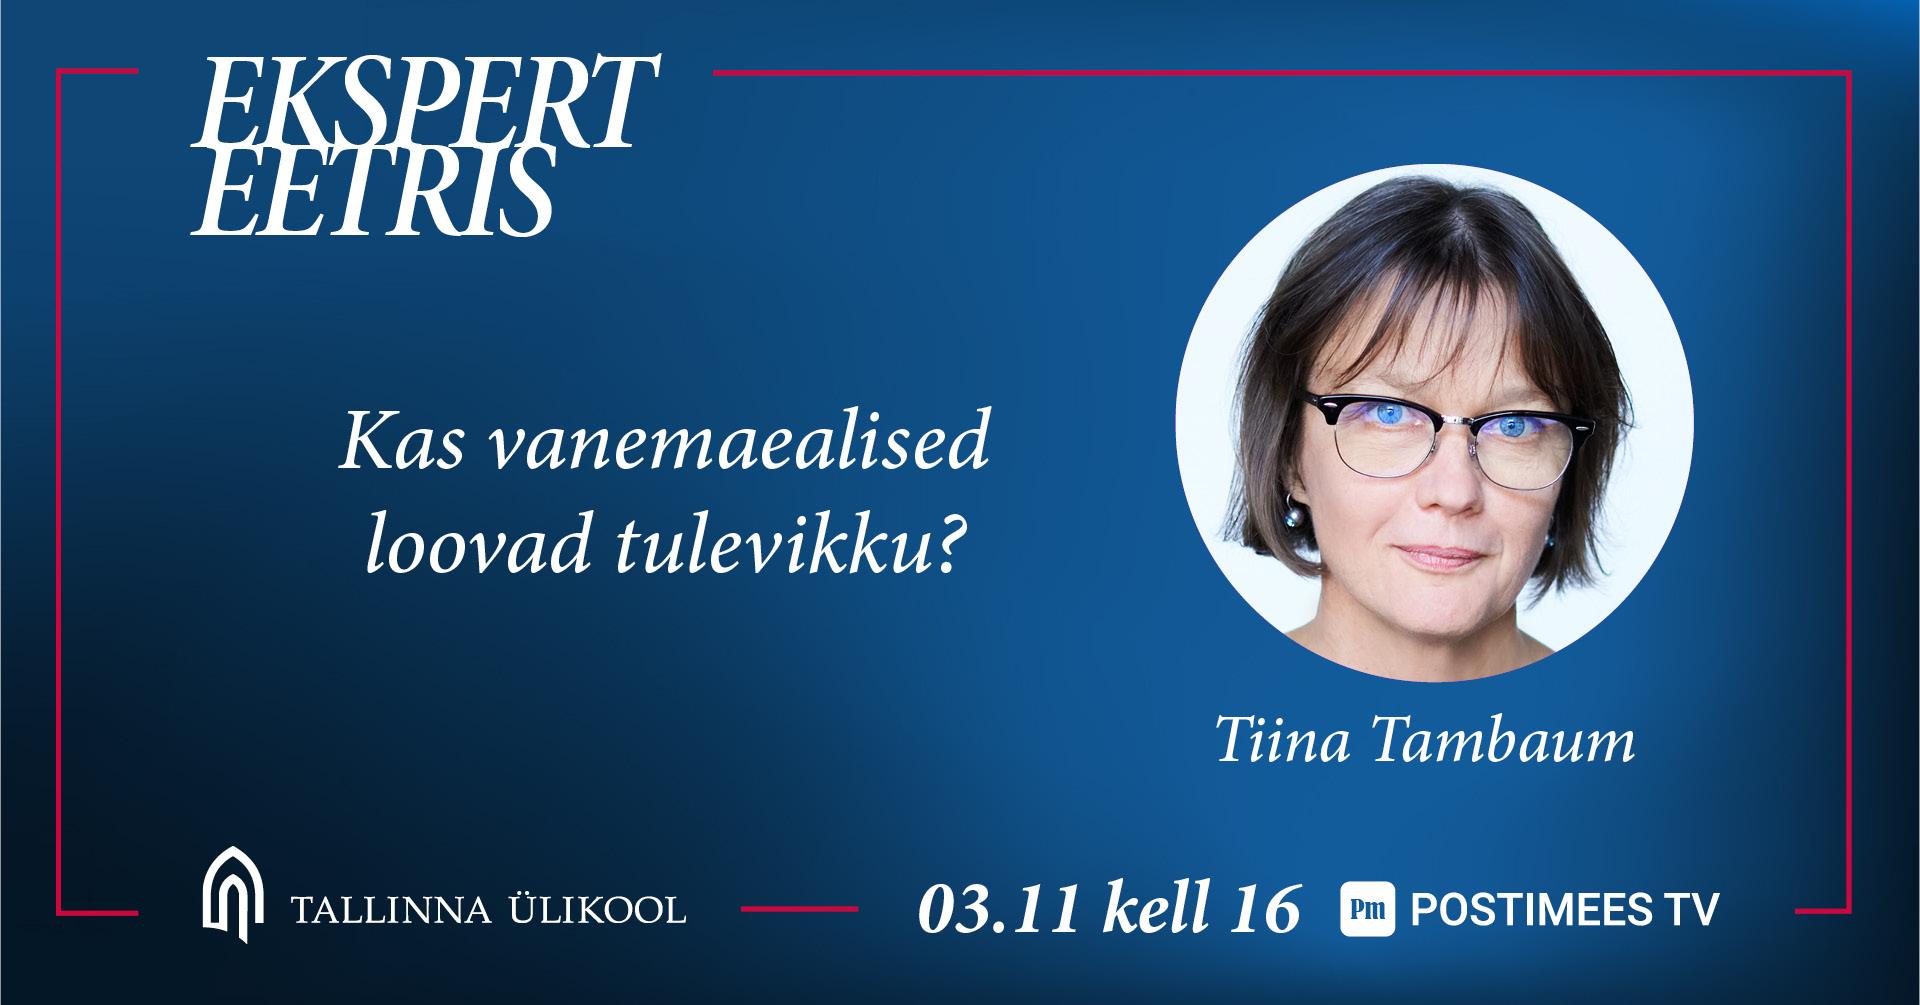 Tiina Tambaum